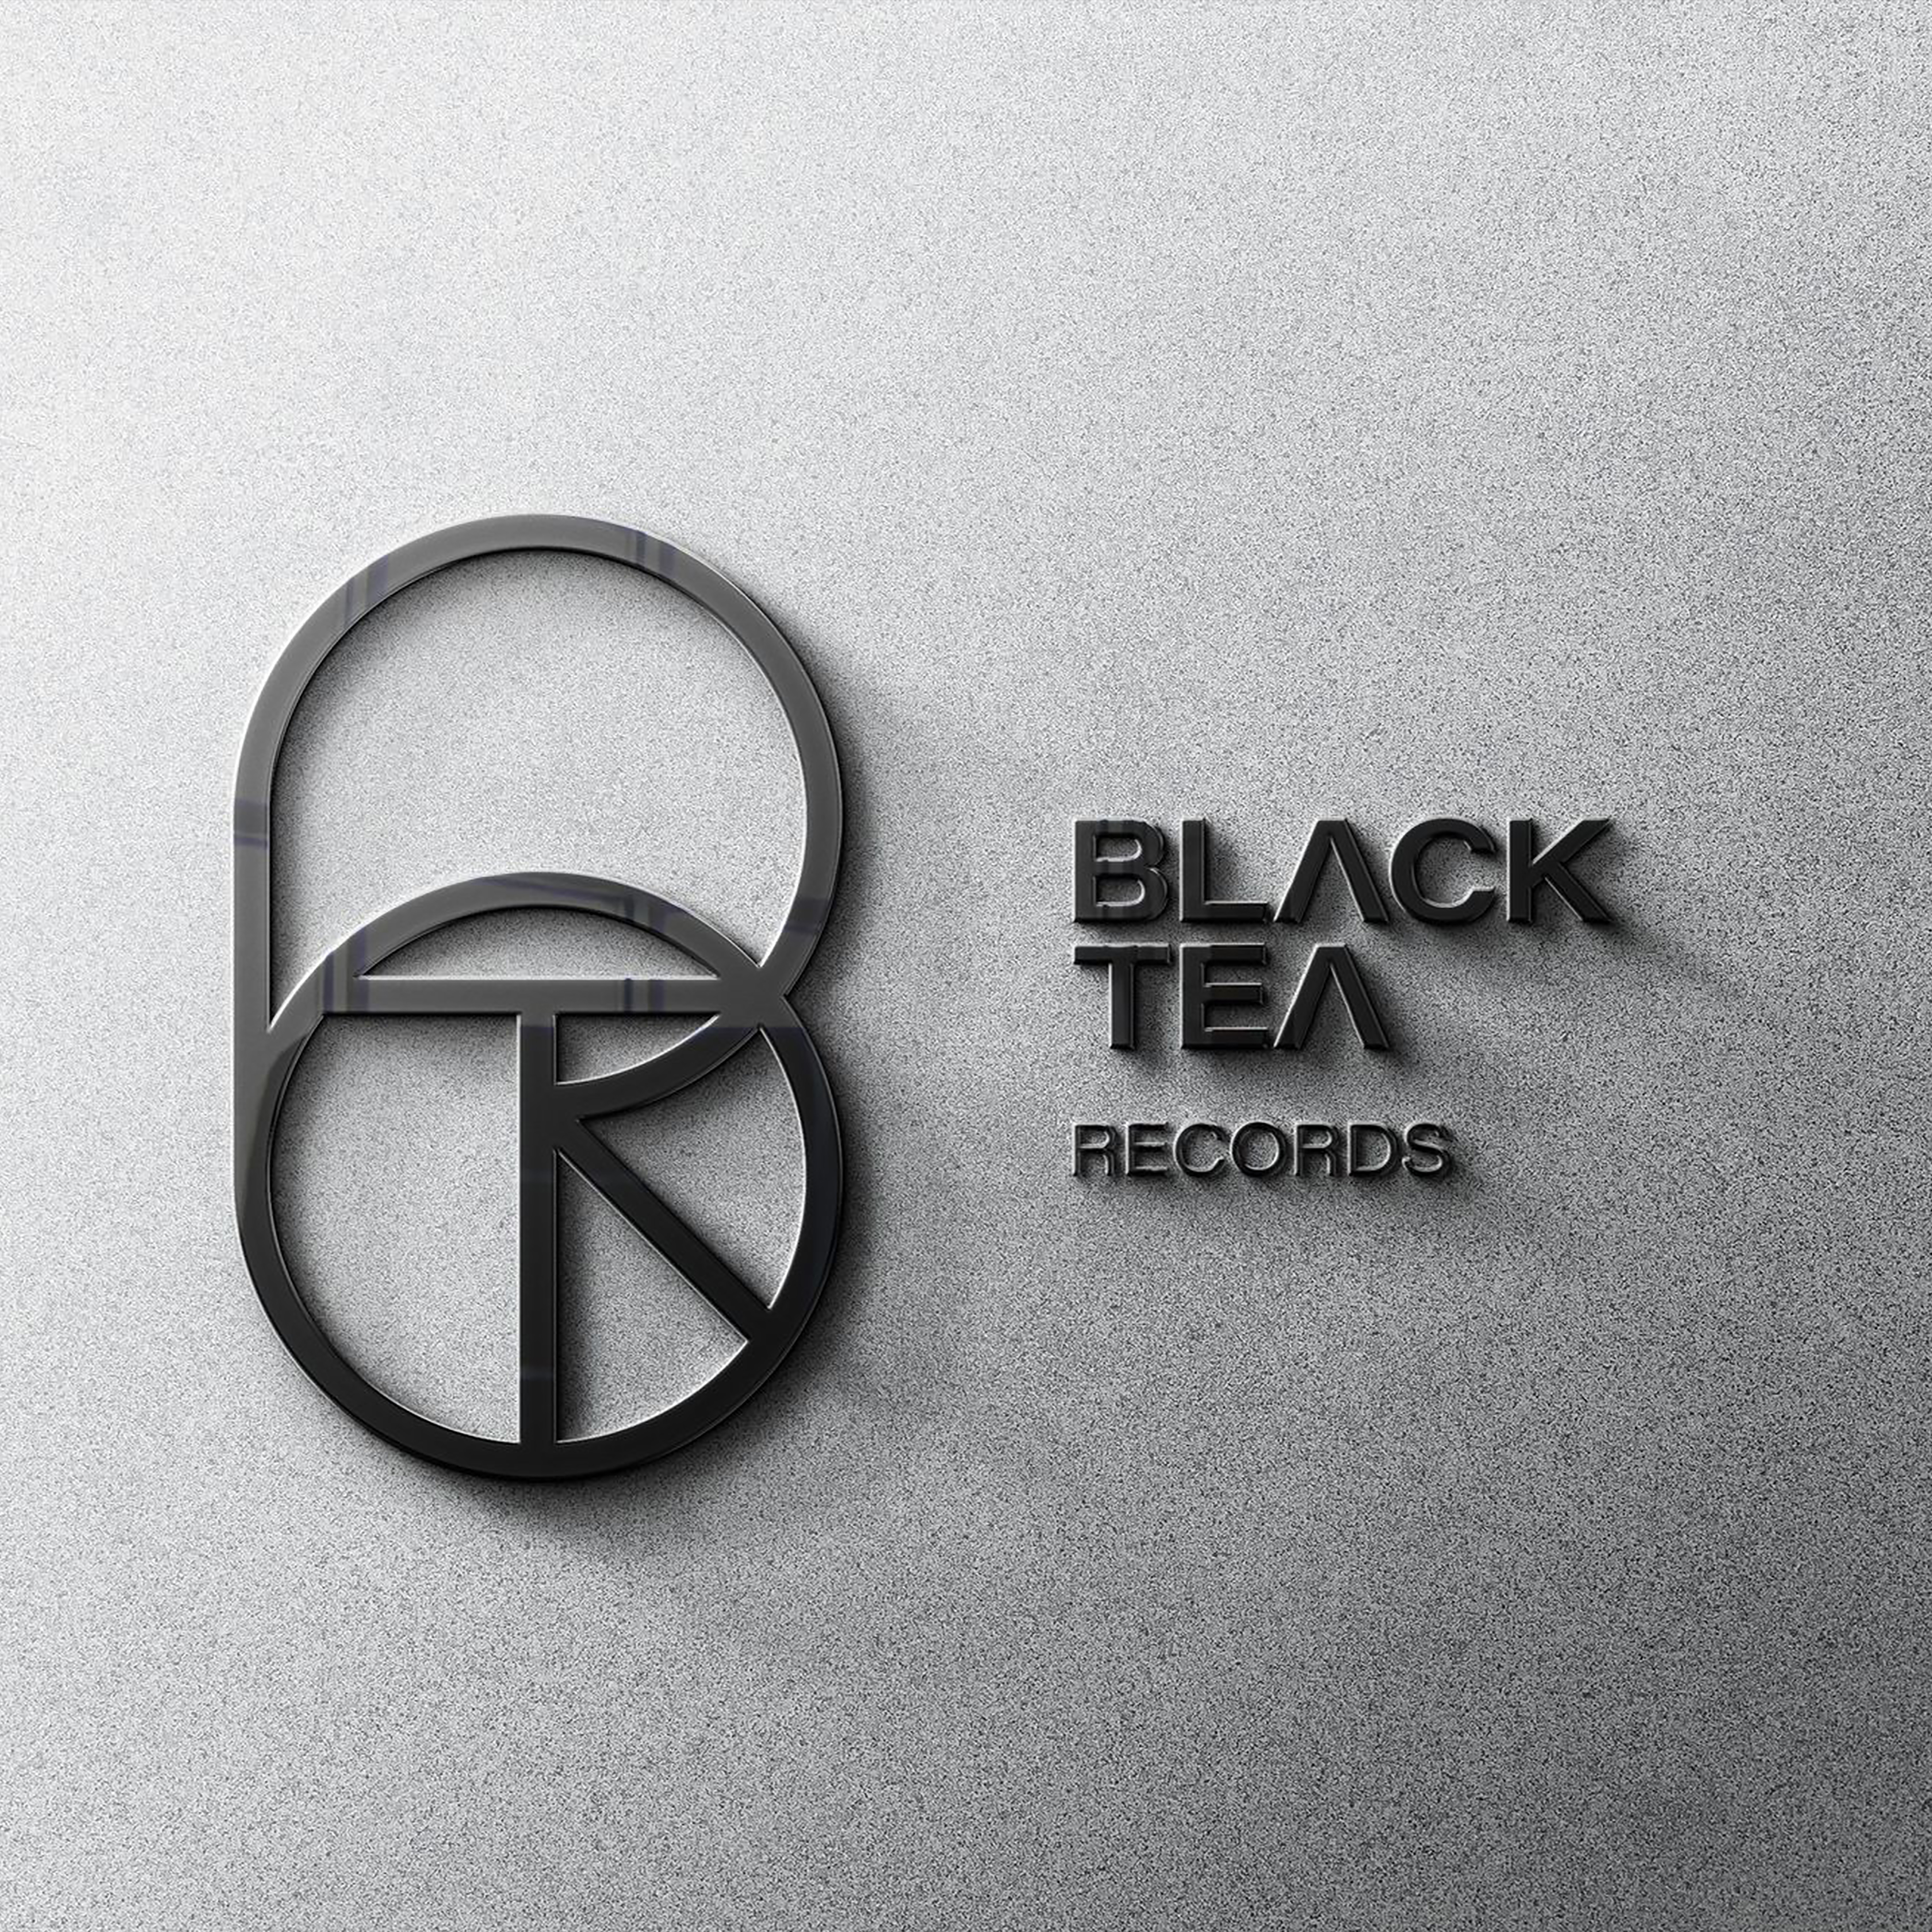 Black Tea Records